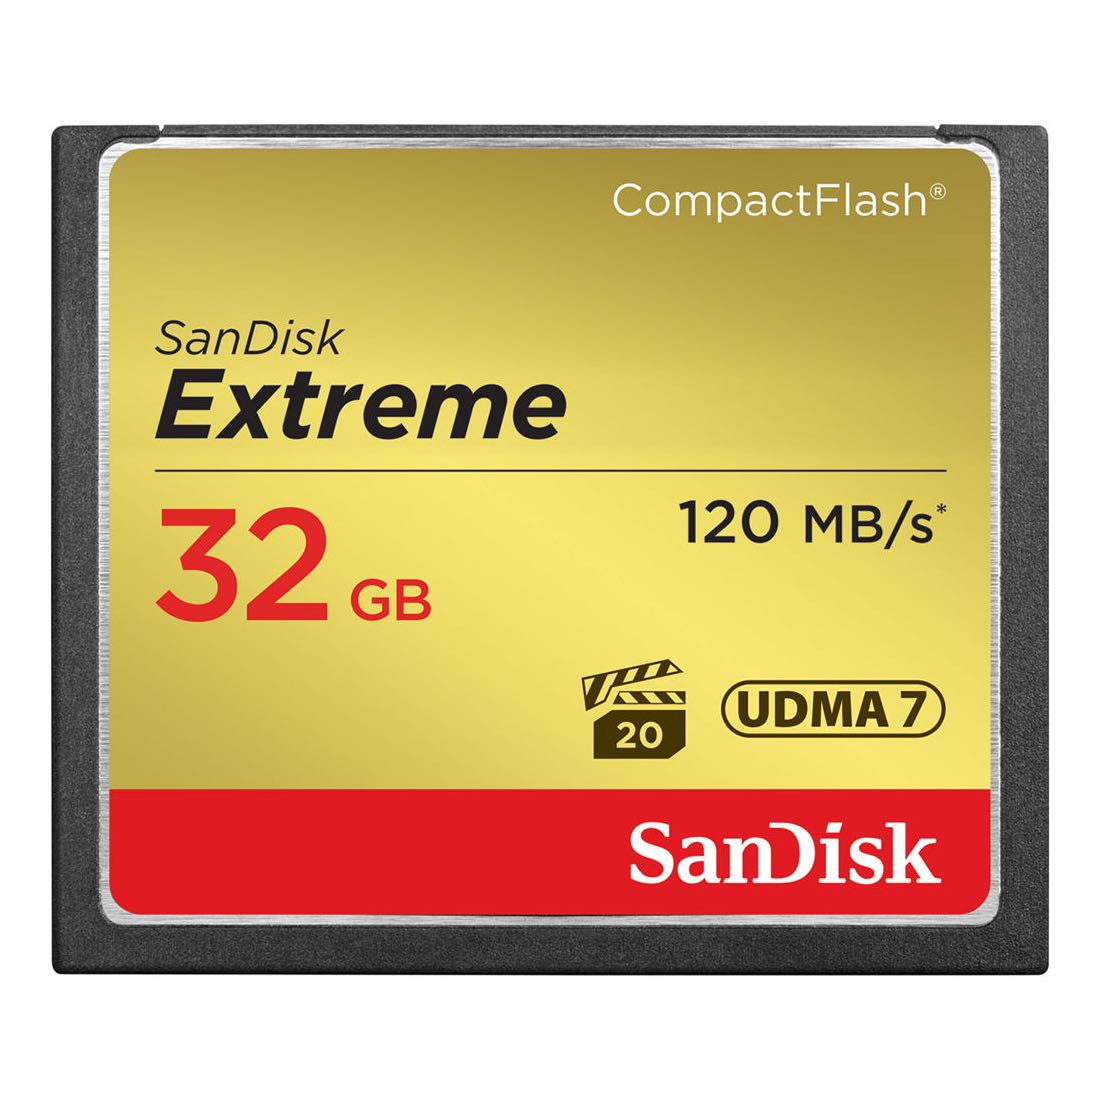 TVignette pour SanDisk 32GB Extreme CompactFlash